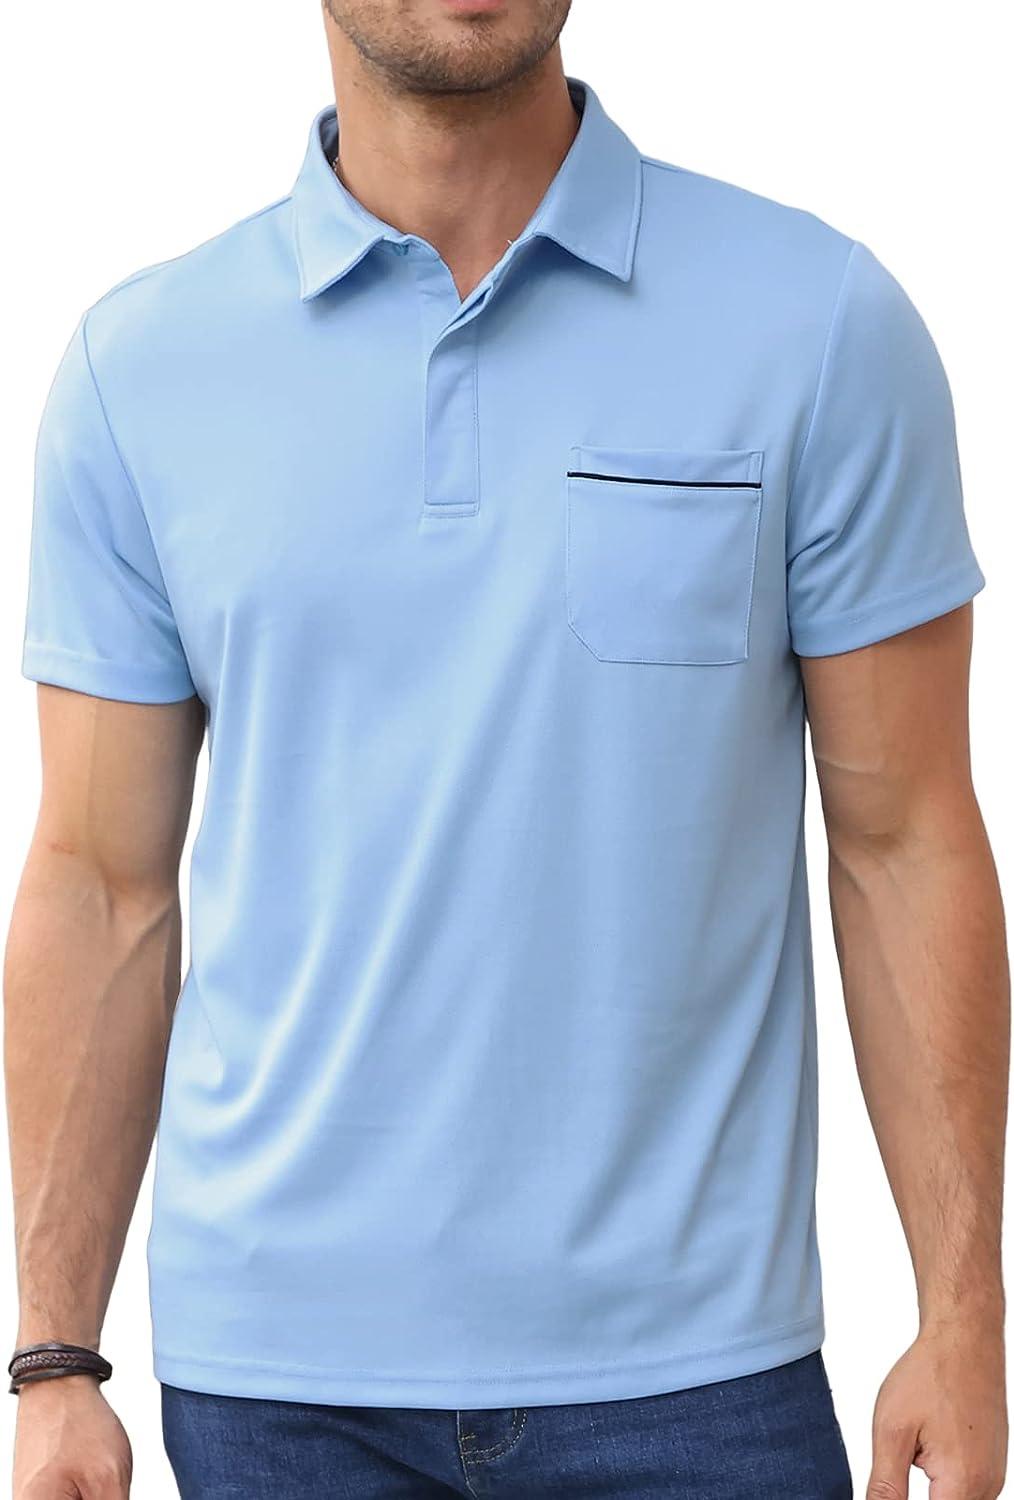  Golf Shirts For Men Summer Shirts Mens Polo Shirts Short  Sleeve Shirts For Men Quick Dry Shirts Work Shirts For Men T Shirts Fishing  Shirts